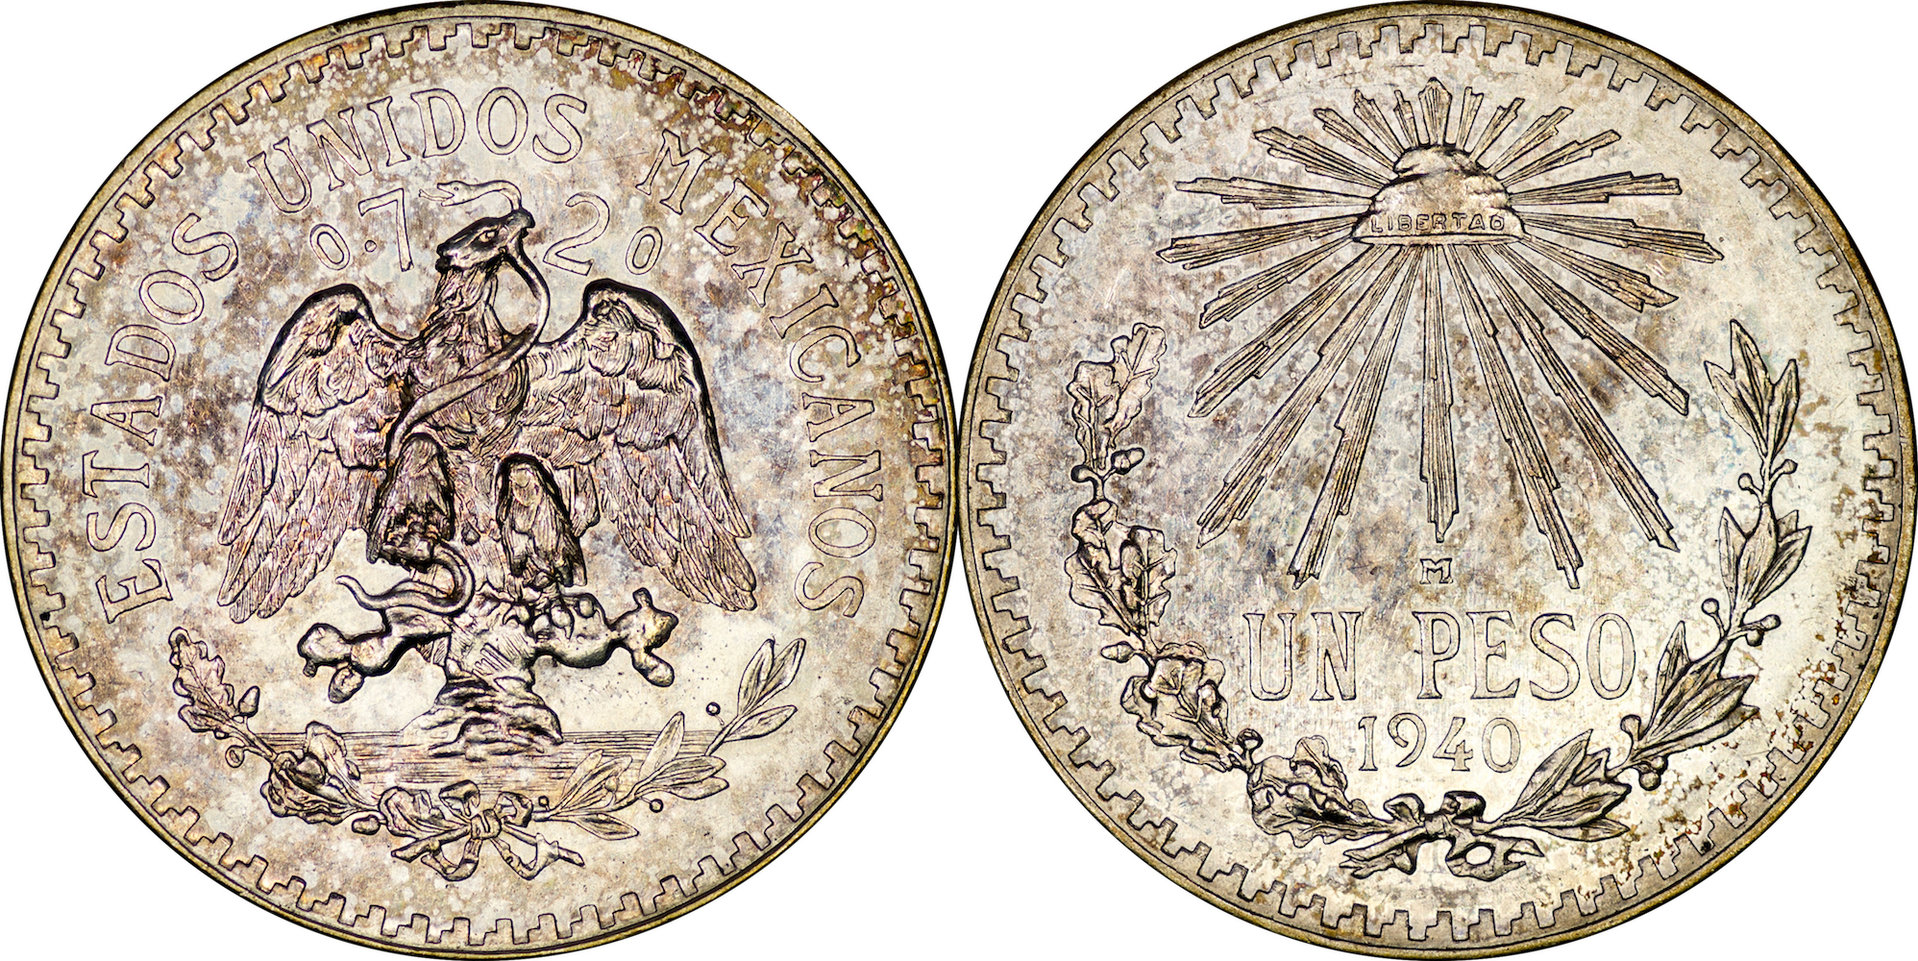 Mexico - 1940 1 Peso.jpg